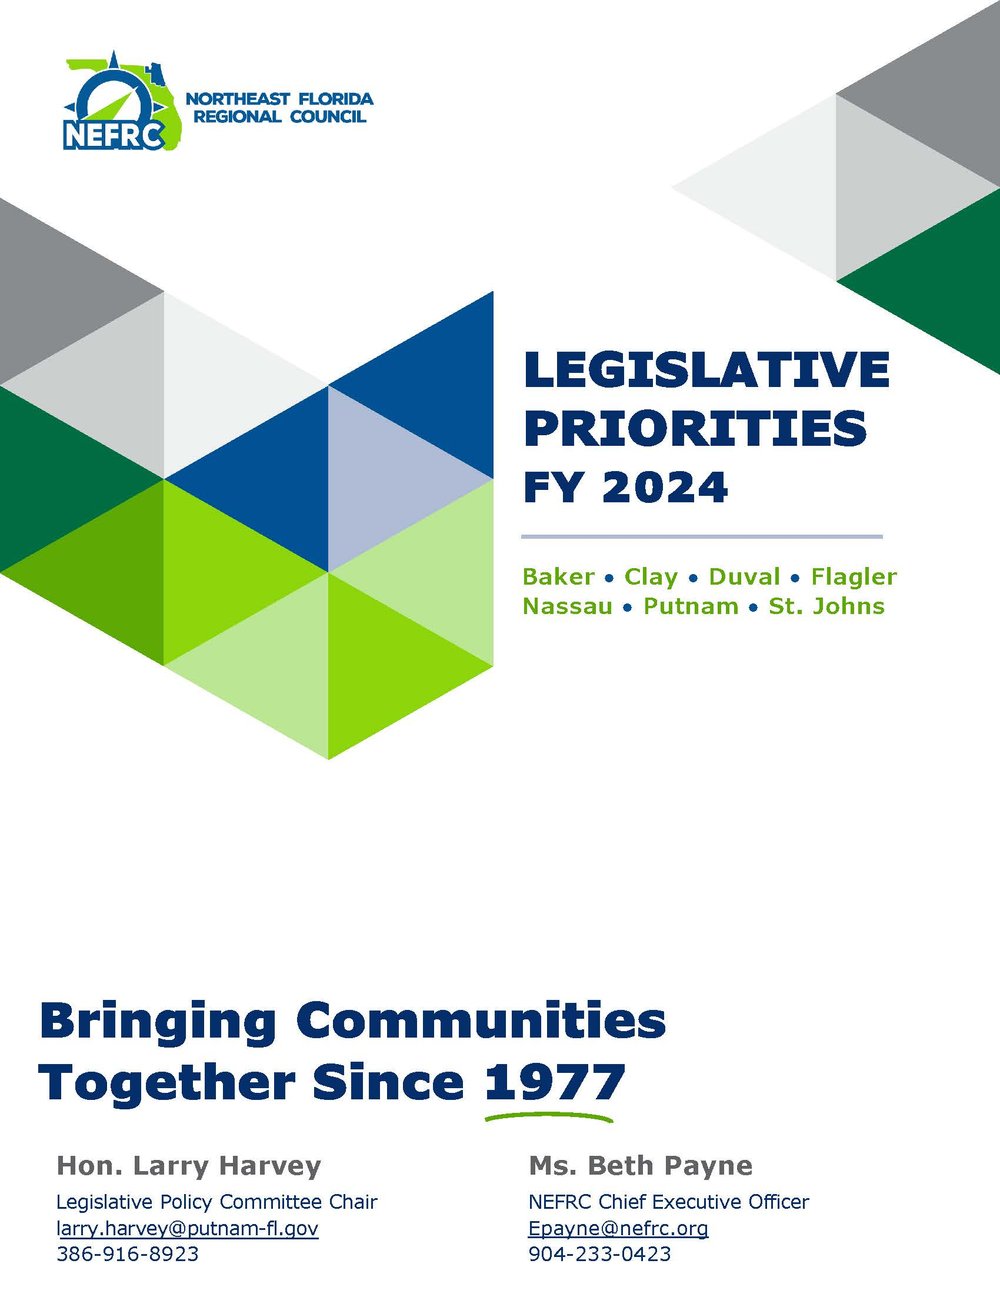 Legislative Priorities image one